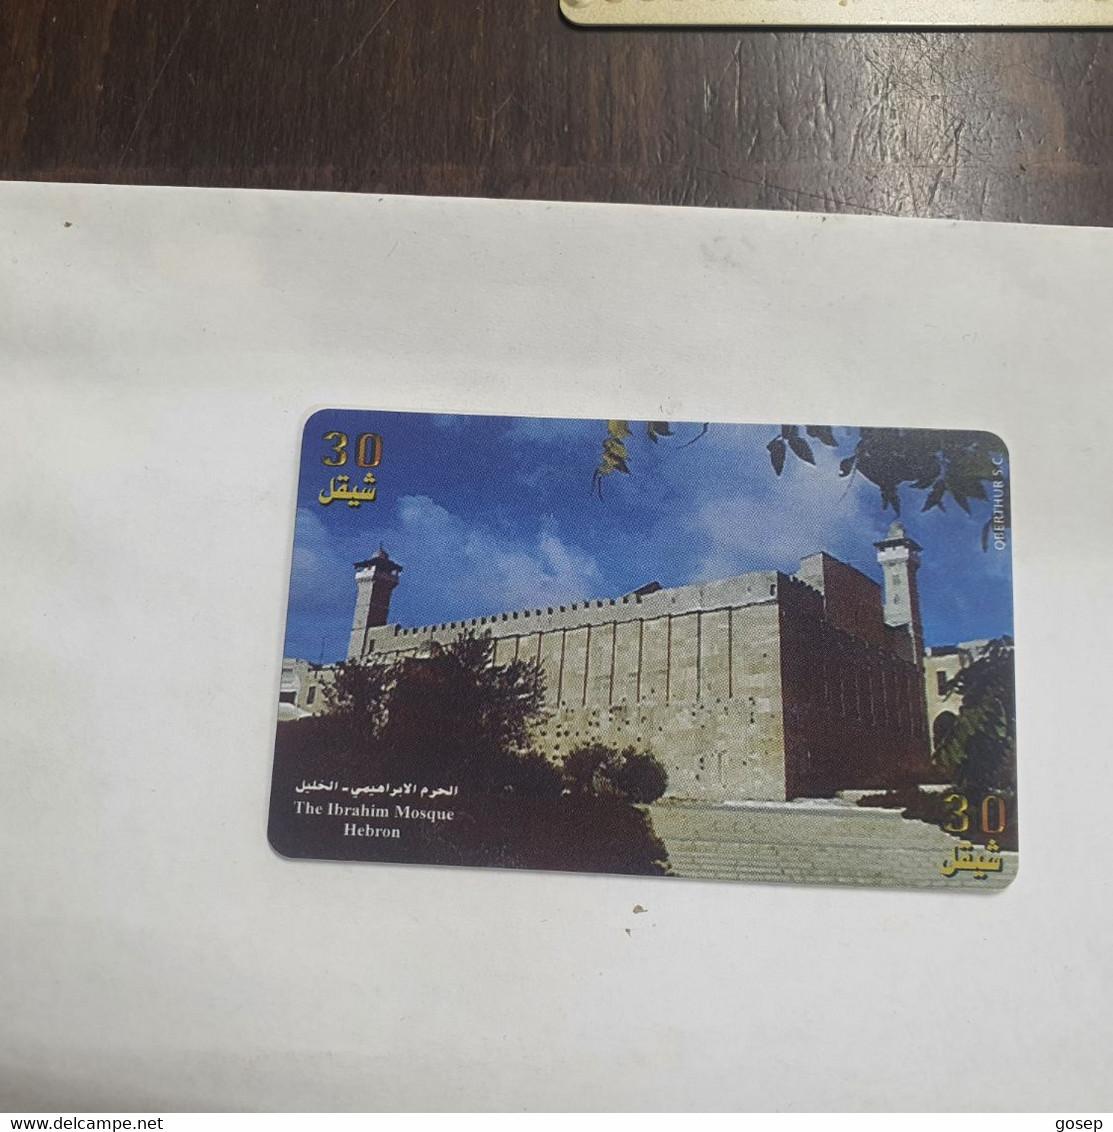 Plastine-(PS-PAL-0006B)-The Ibrahim-Mosque-hebron-(462)-(8/1999)(30₪)(0057-068523)-used Card+1card Prepiad Free - Palestina